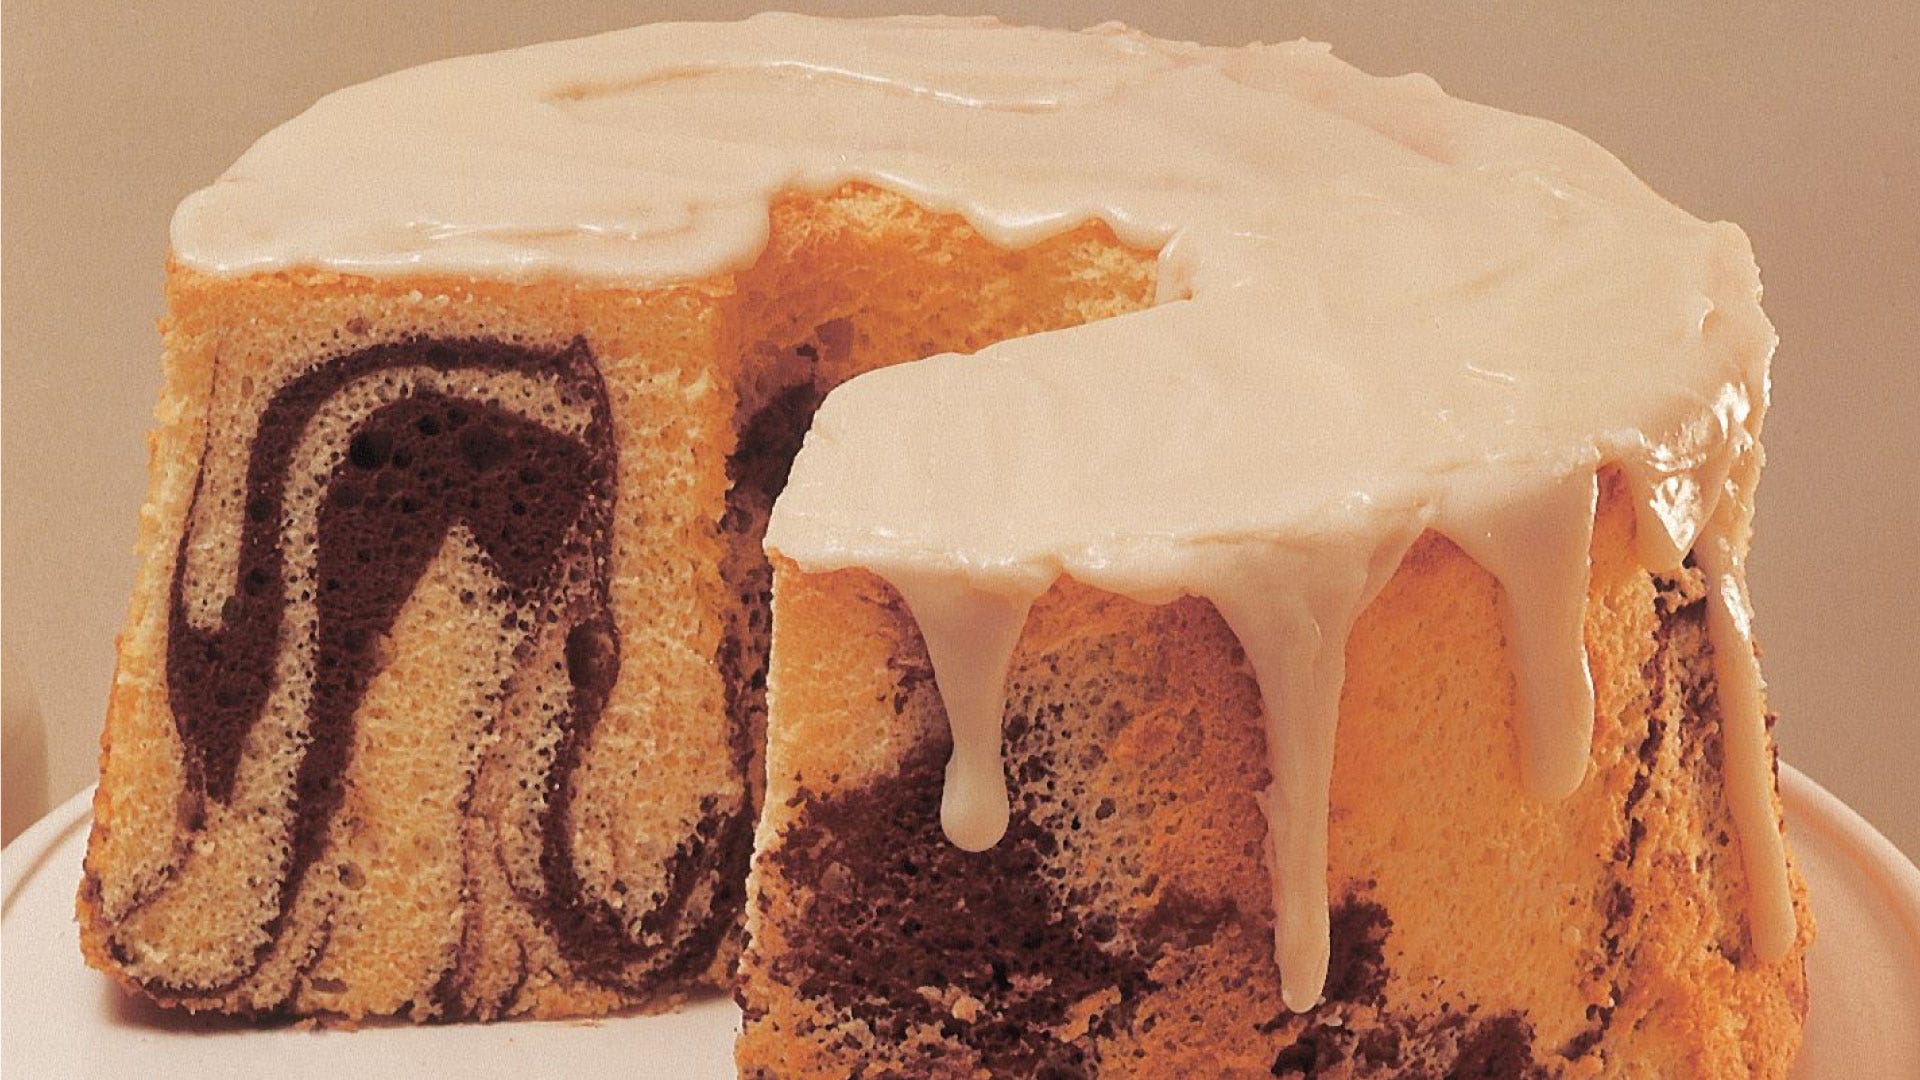 Marble Chiffon Cake Recipe: How to Make It